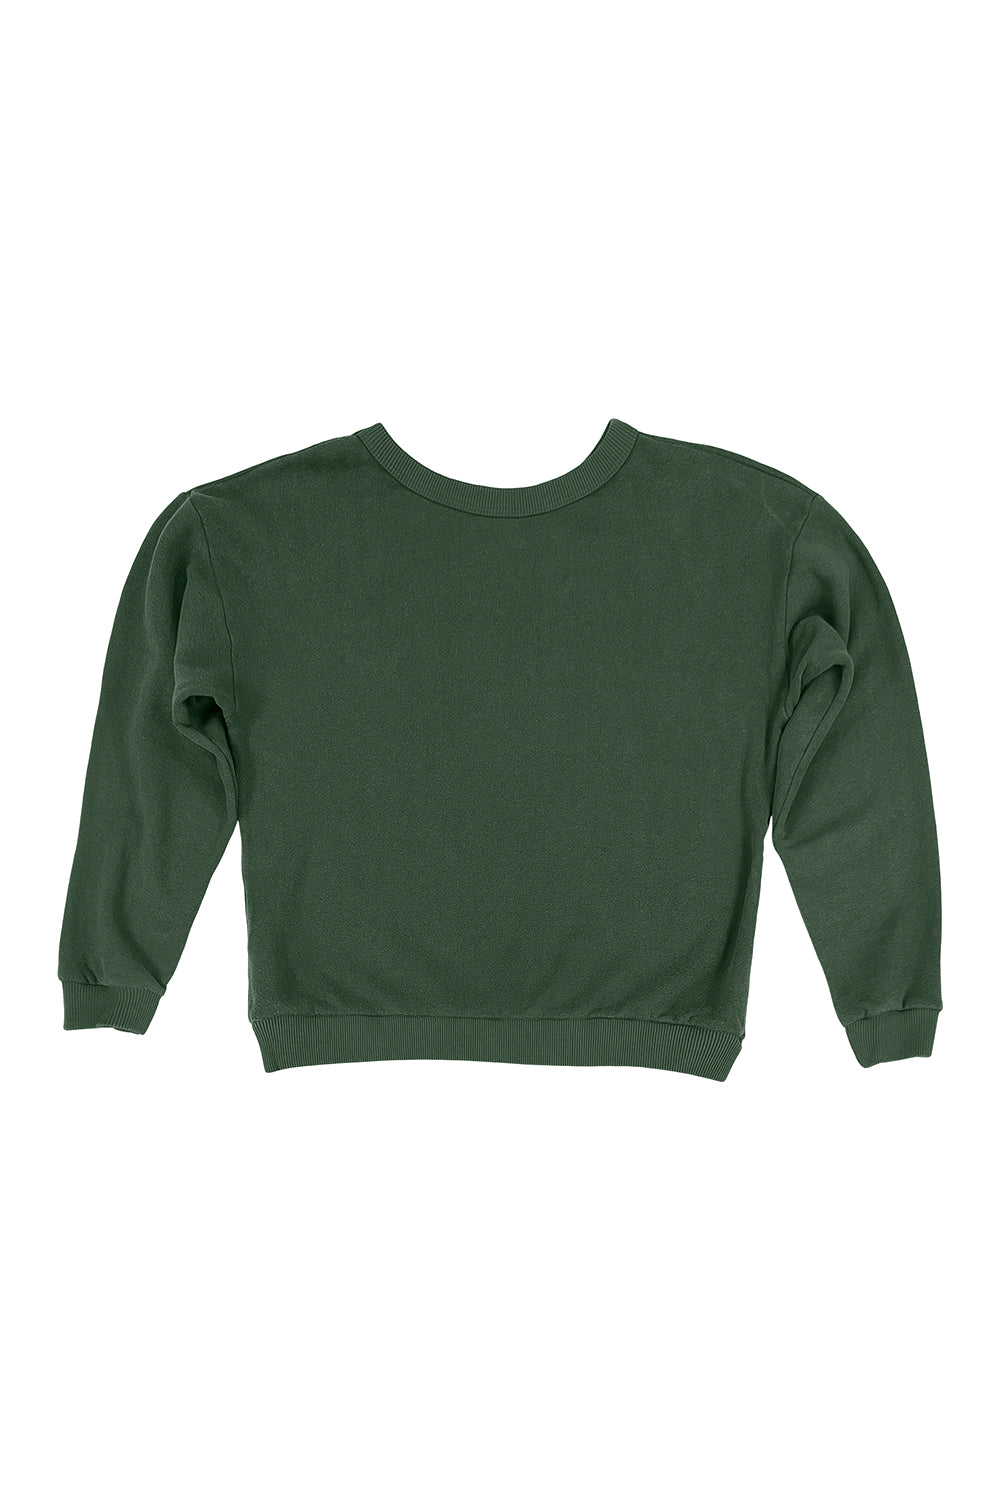 Crux Cropped Sweatshirt | Jungmaven Accessories Hemp Clothing 